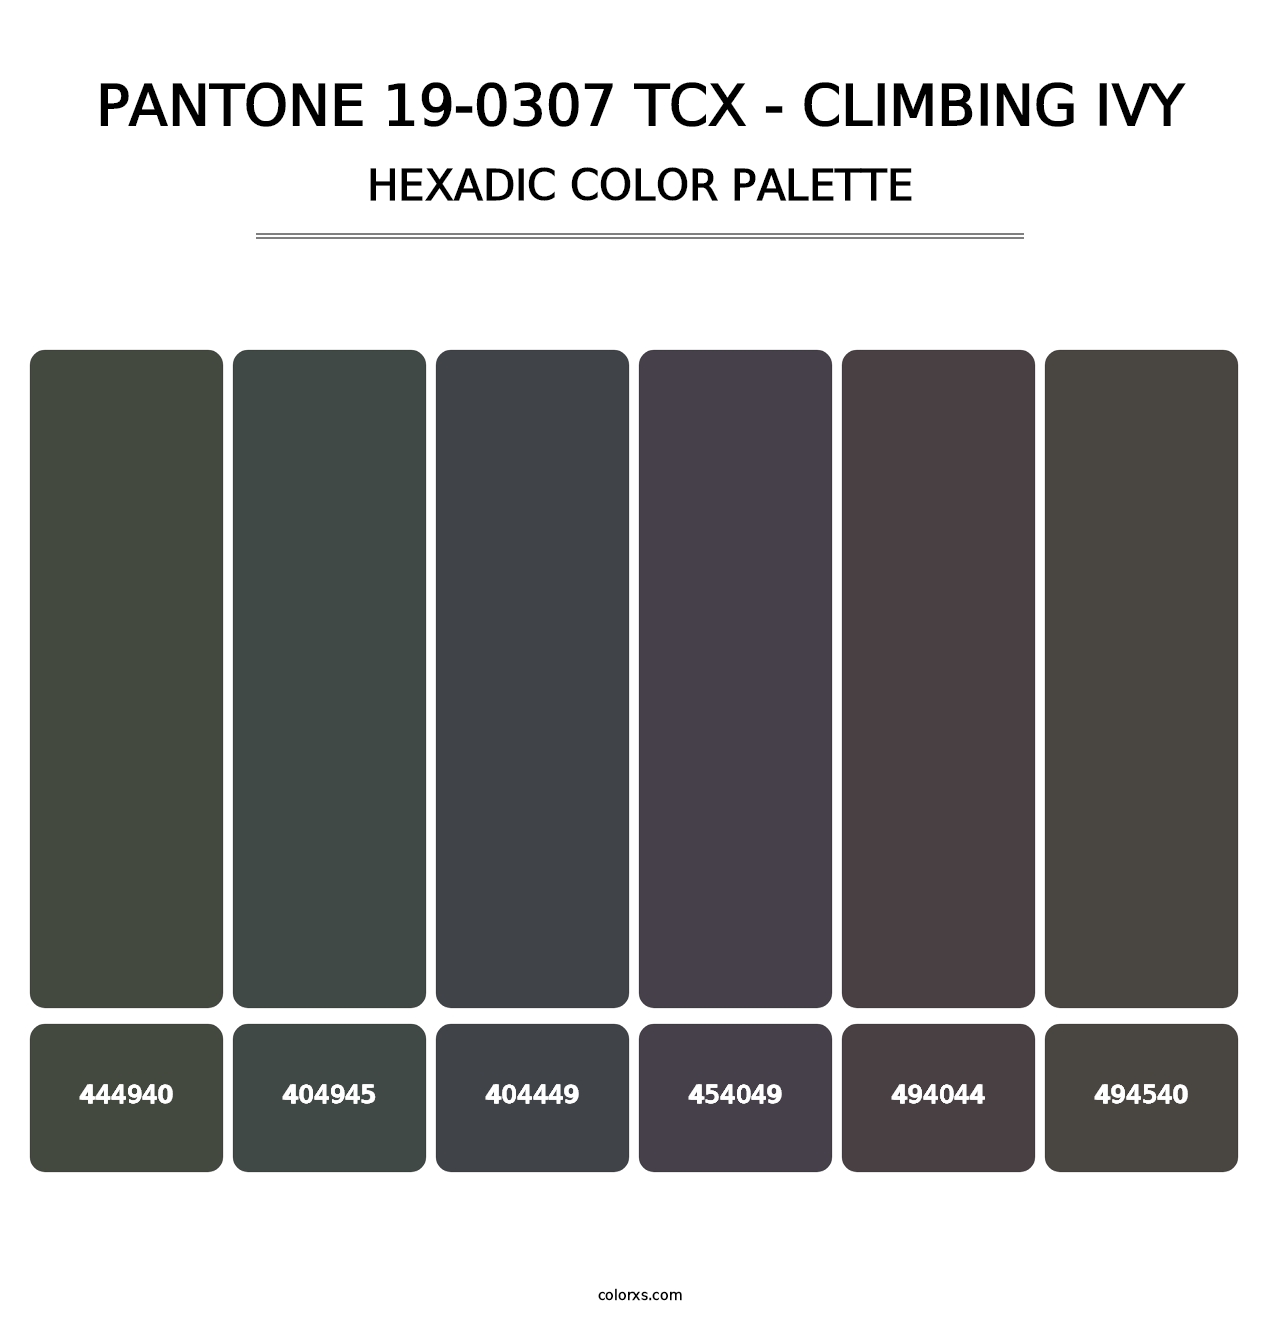 PANTONE 19-0307 TCX - Climbing Ivy - Hexadic Color Palette